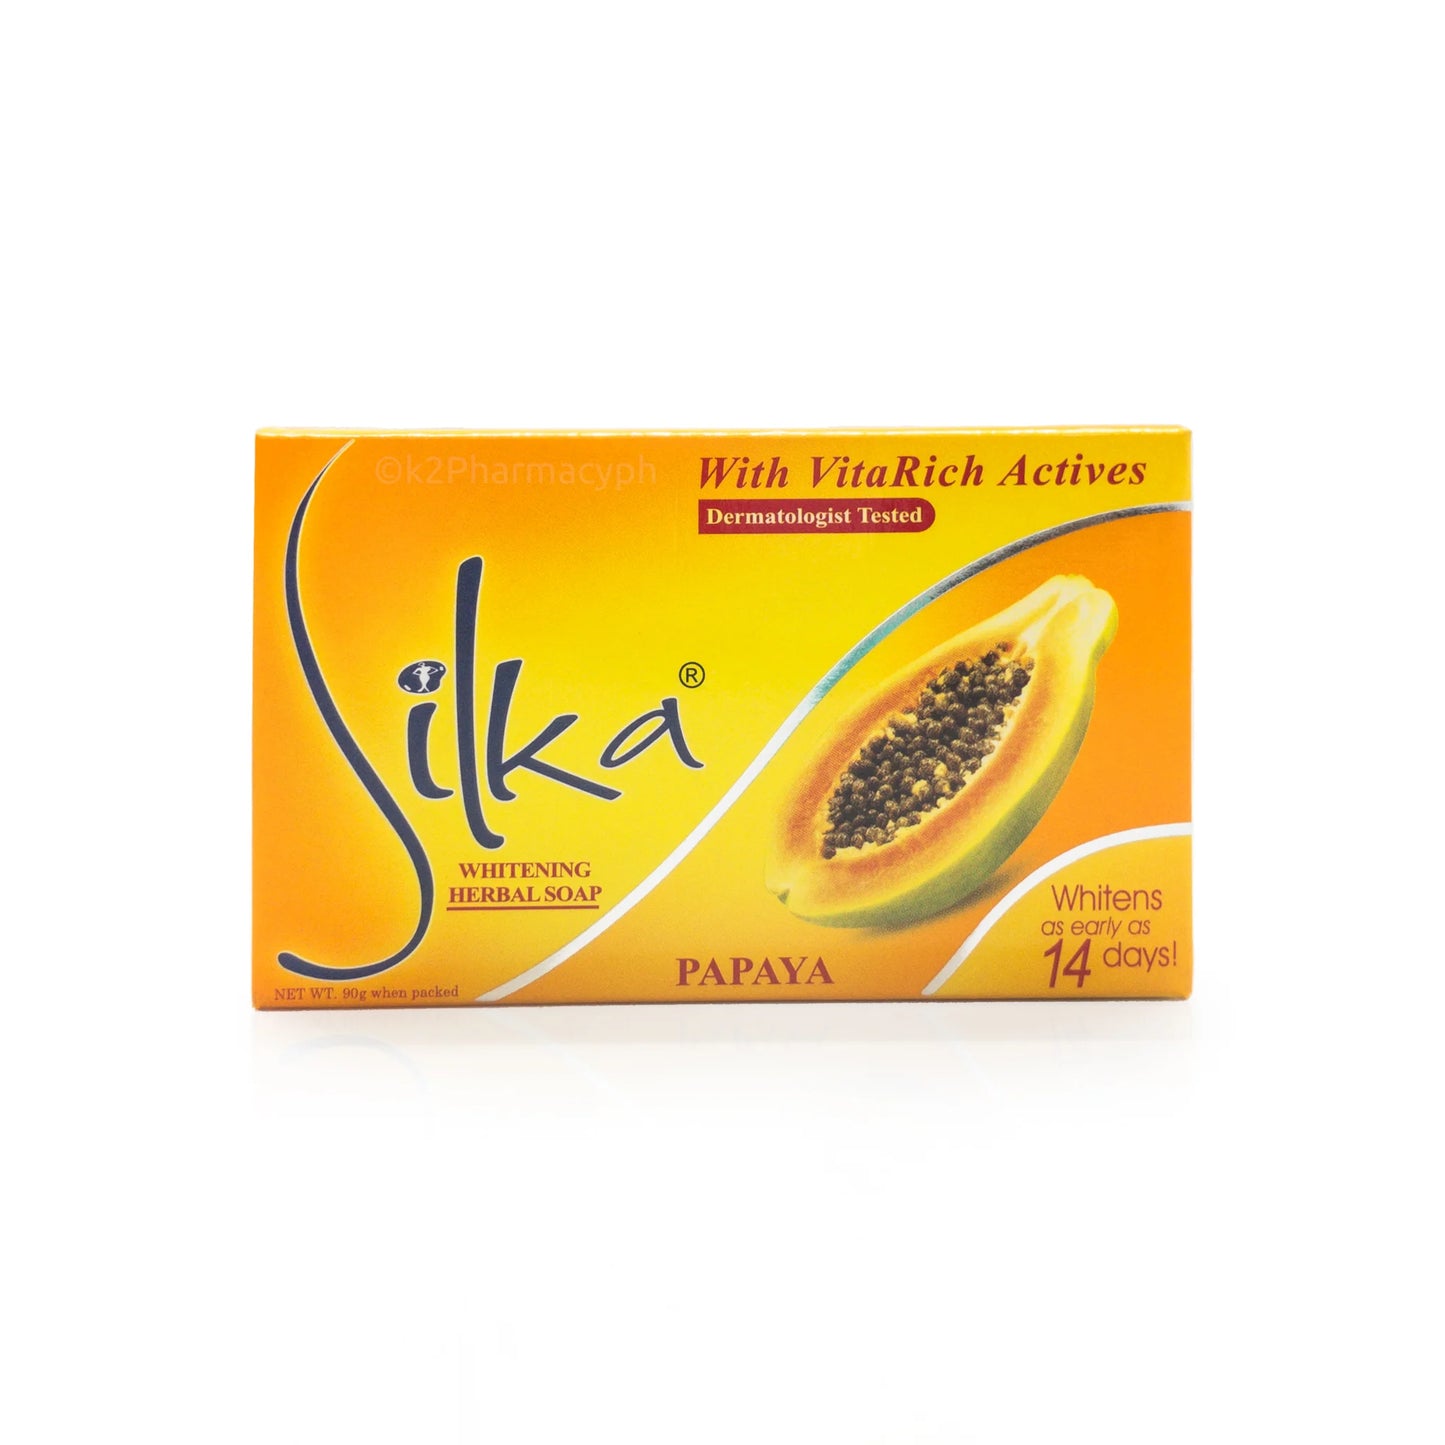 Silka Whitening Herbal Soap